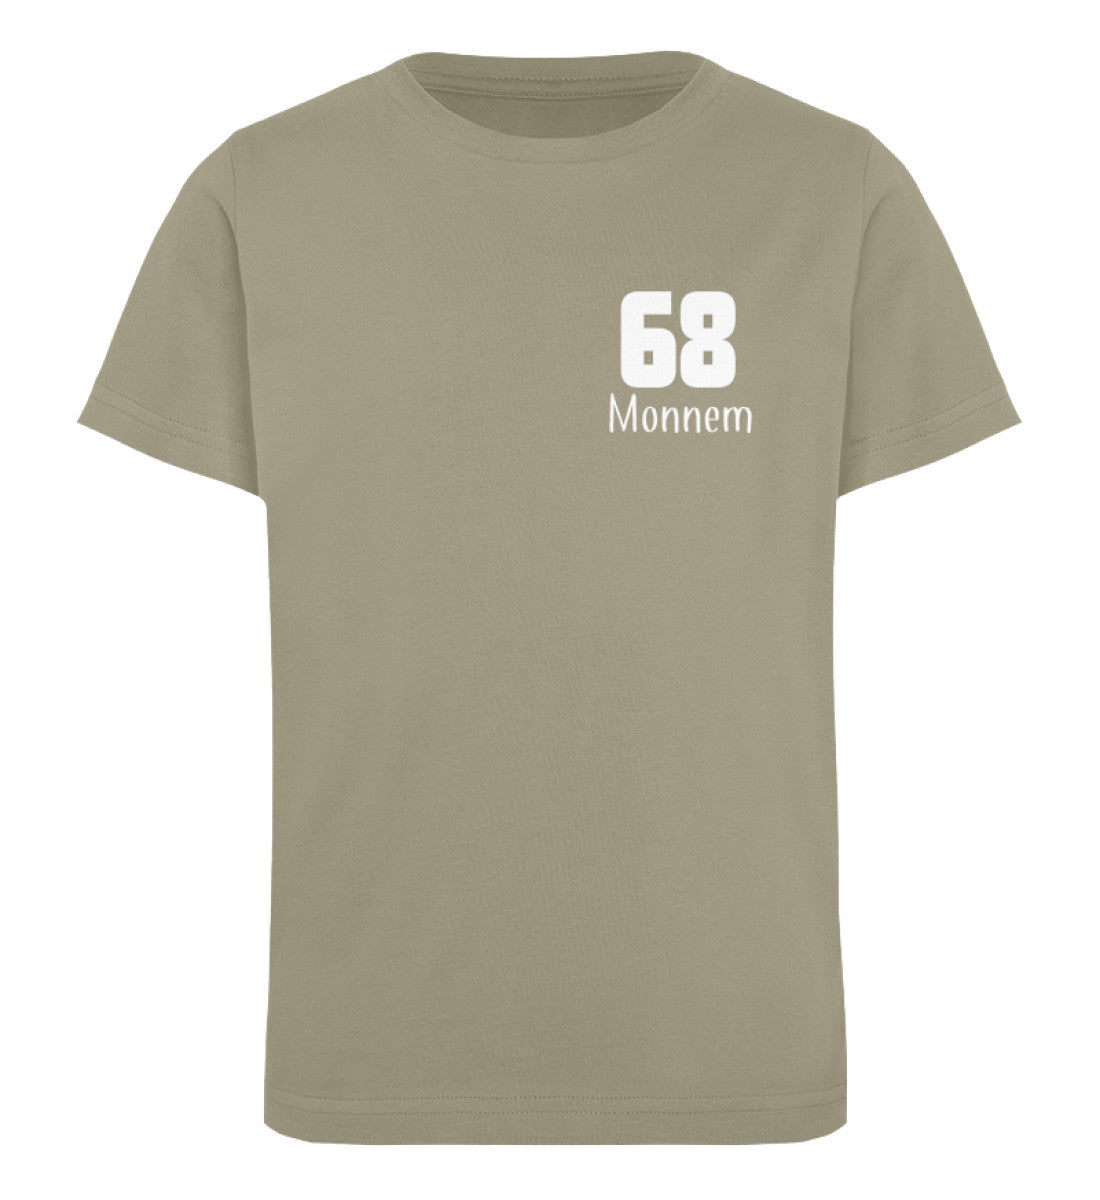 68 Monnem dark Kids Organic Shirt - talejo